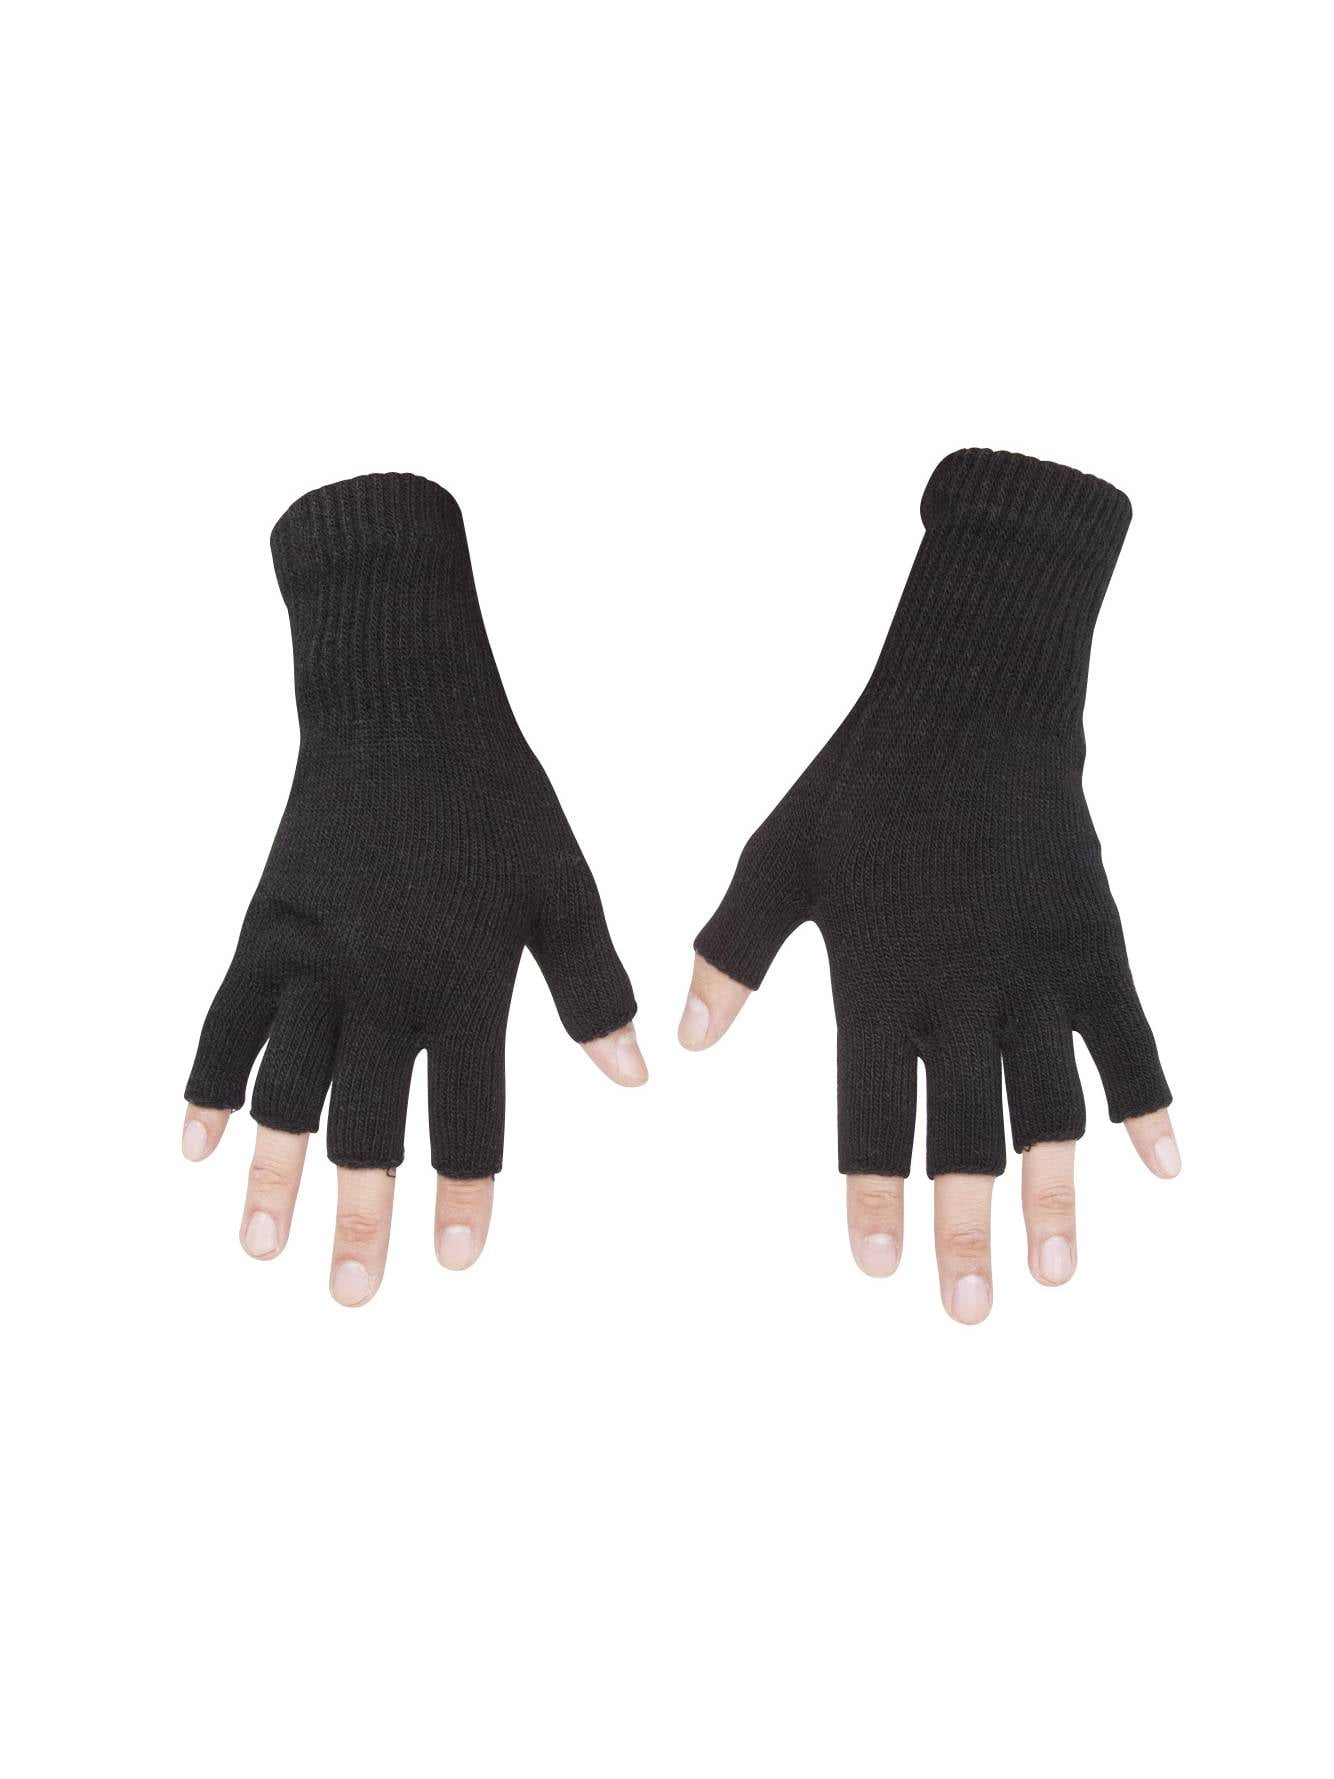 Unisex Half Threads Knit Gravity Navy Blue Gloves, Fingerless Warm Stretchy Finger